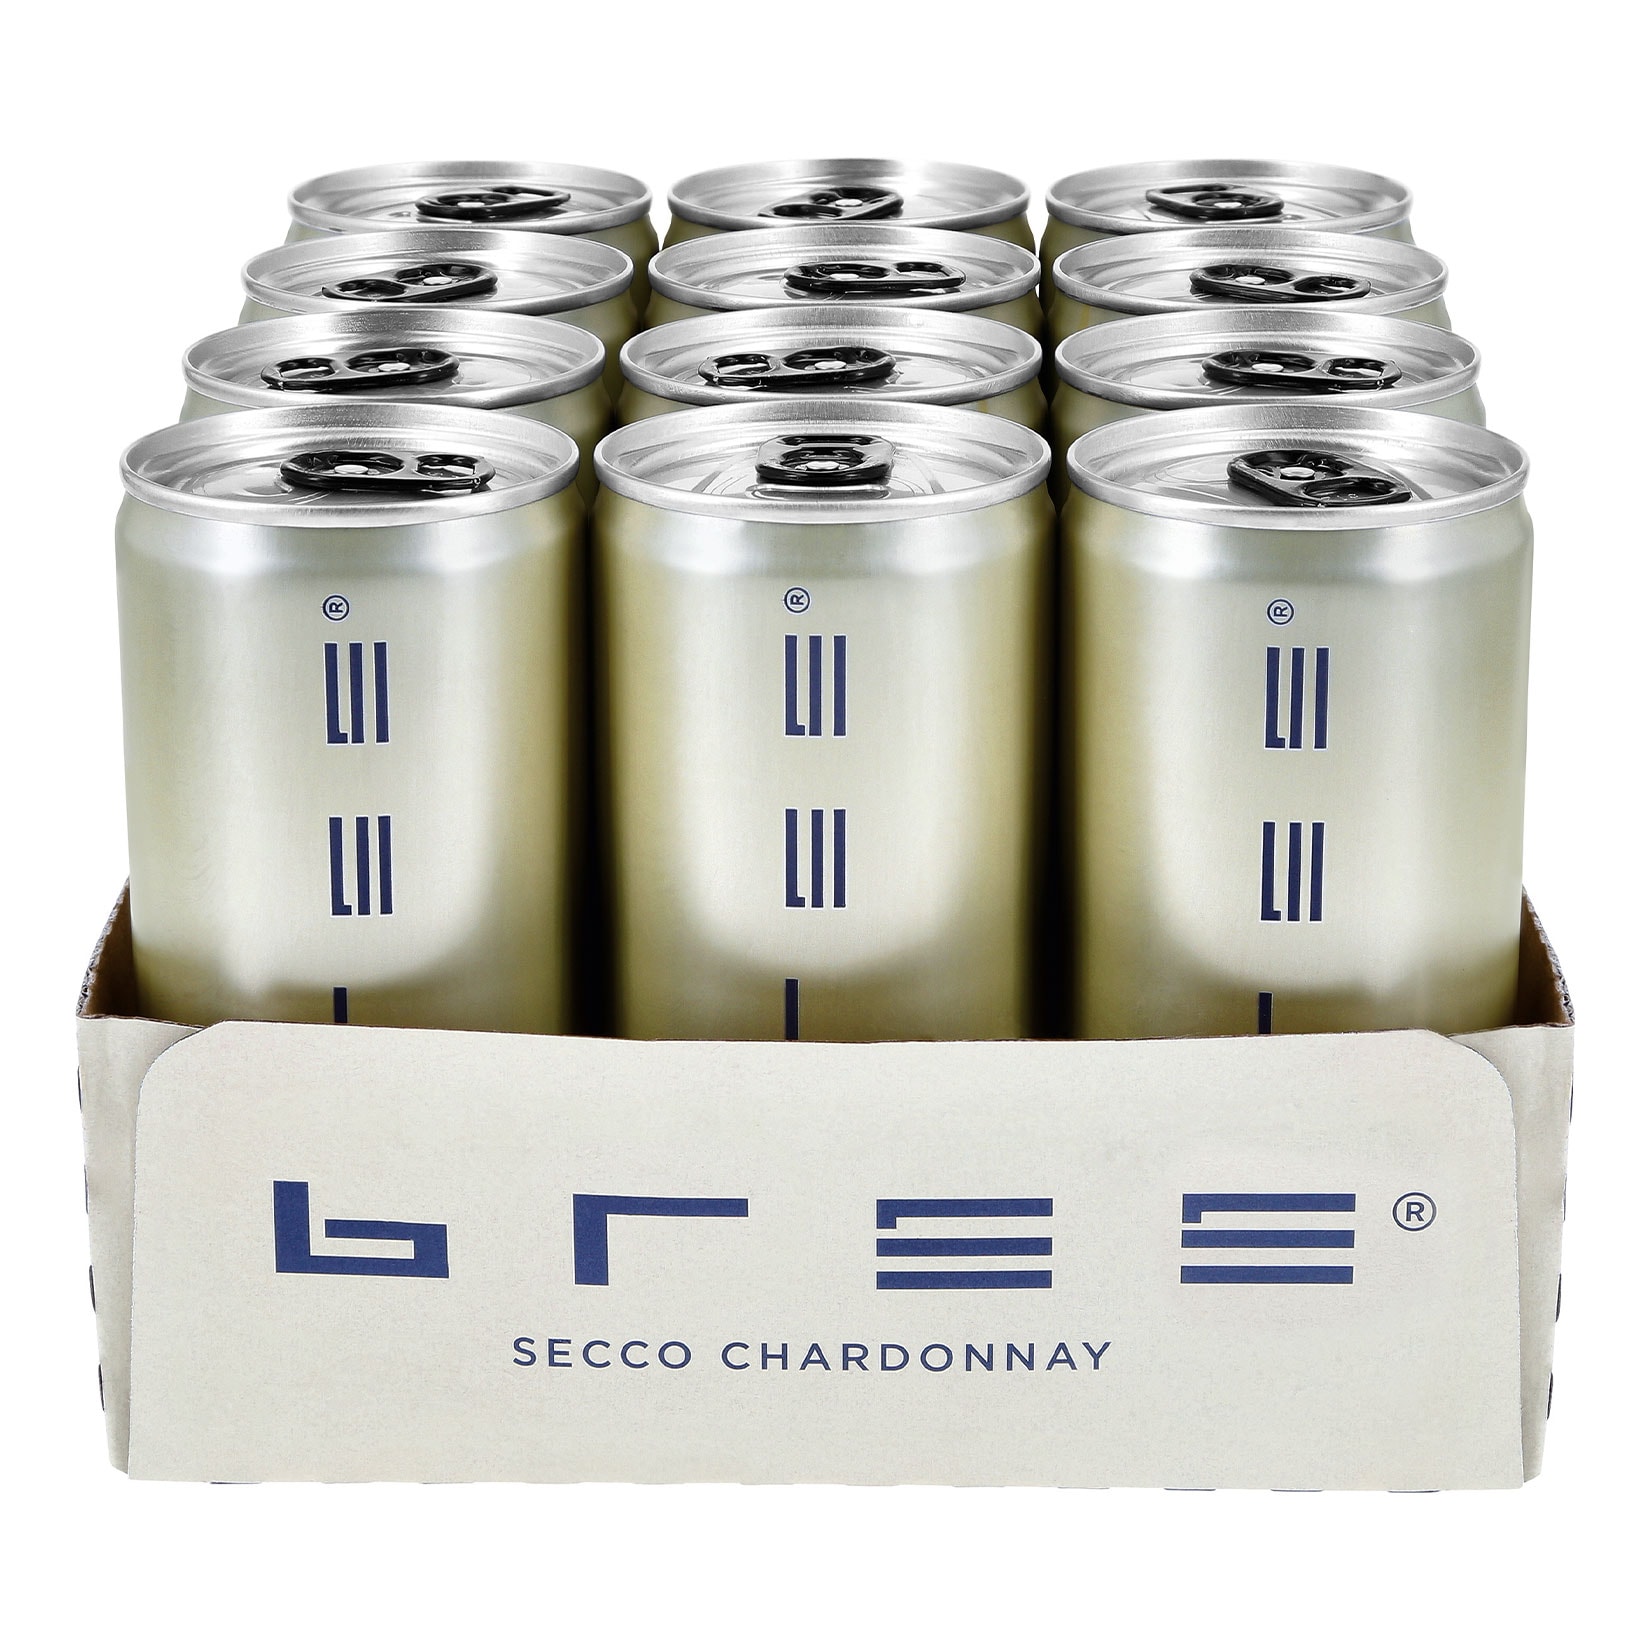 Bree Secco Chardonnay Weiß trocken 11,0 % vol 0,20 Liter Dose, 12er Pack